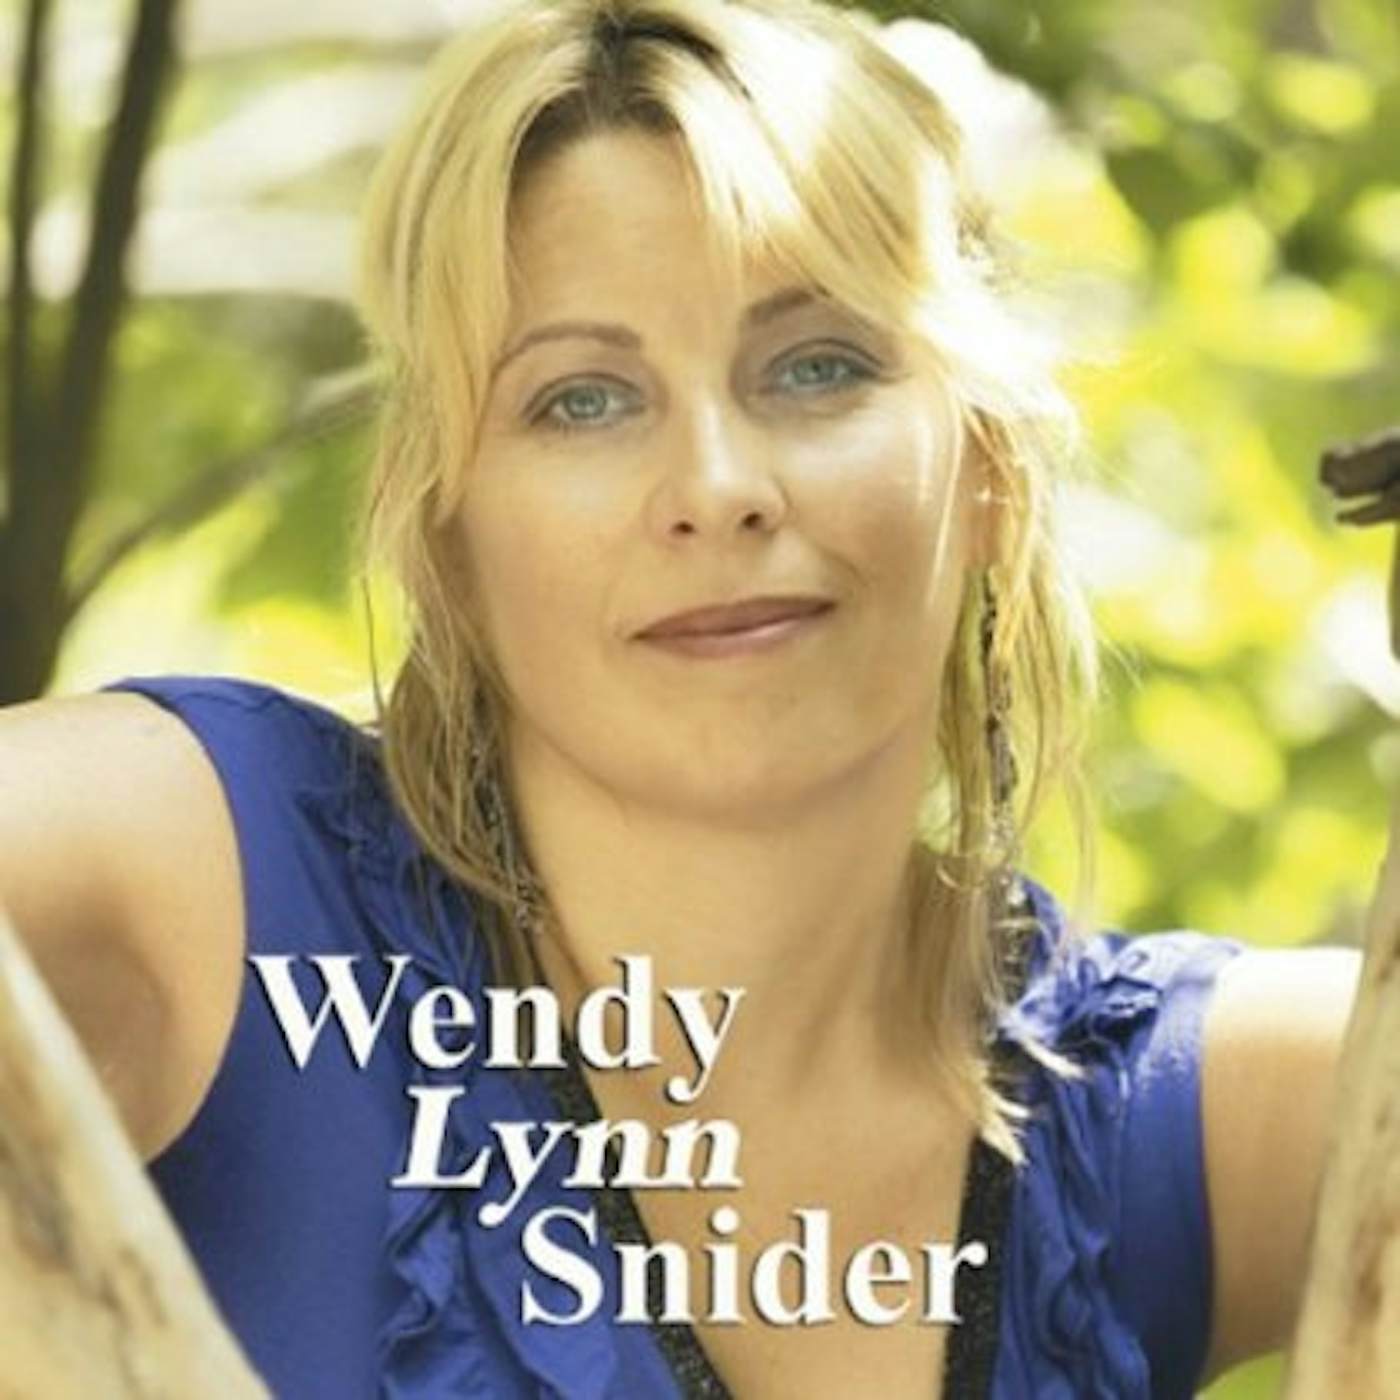 WENDY LYNN SNIDER CD